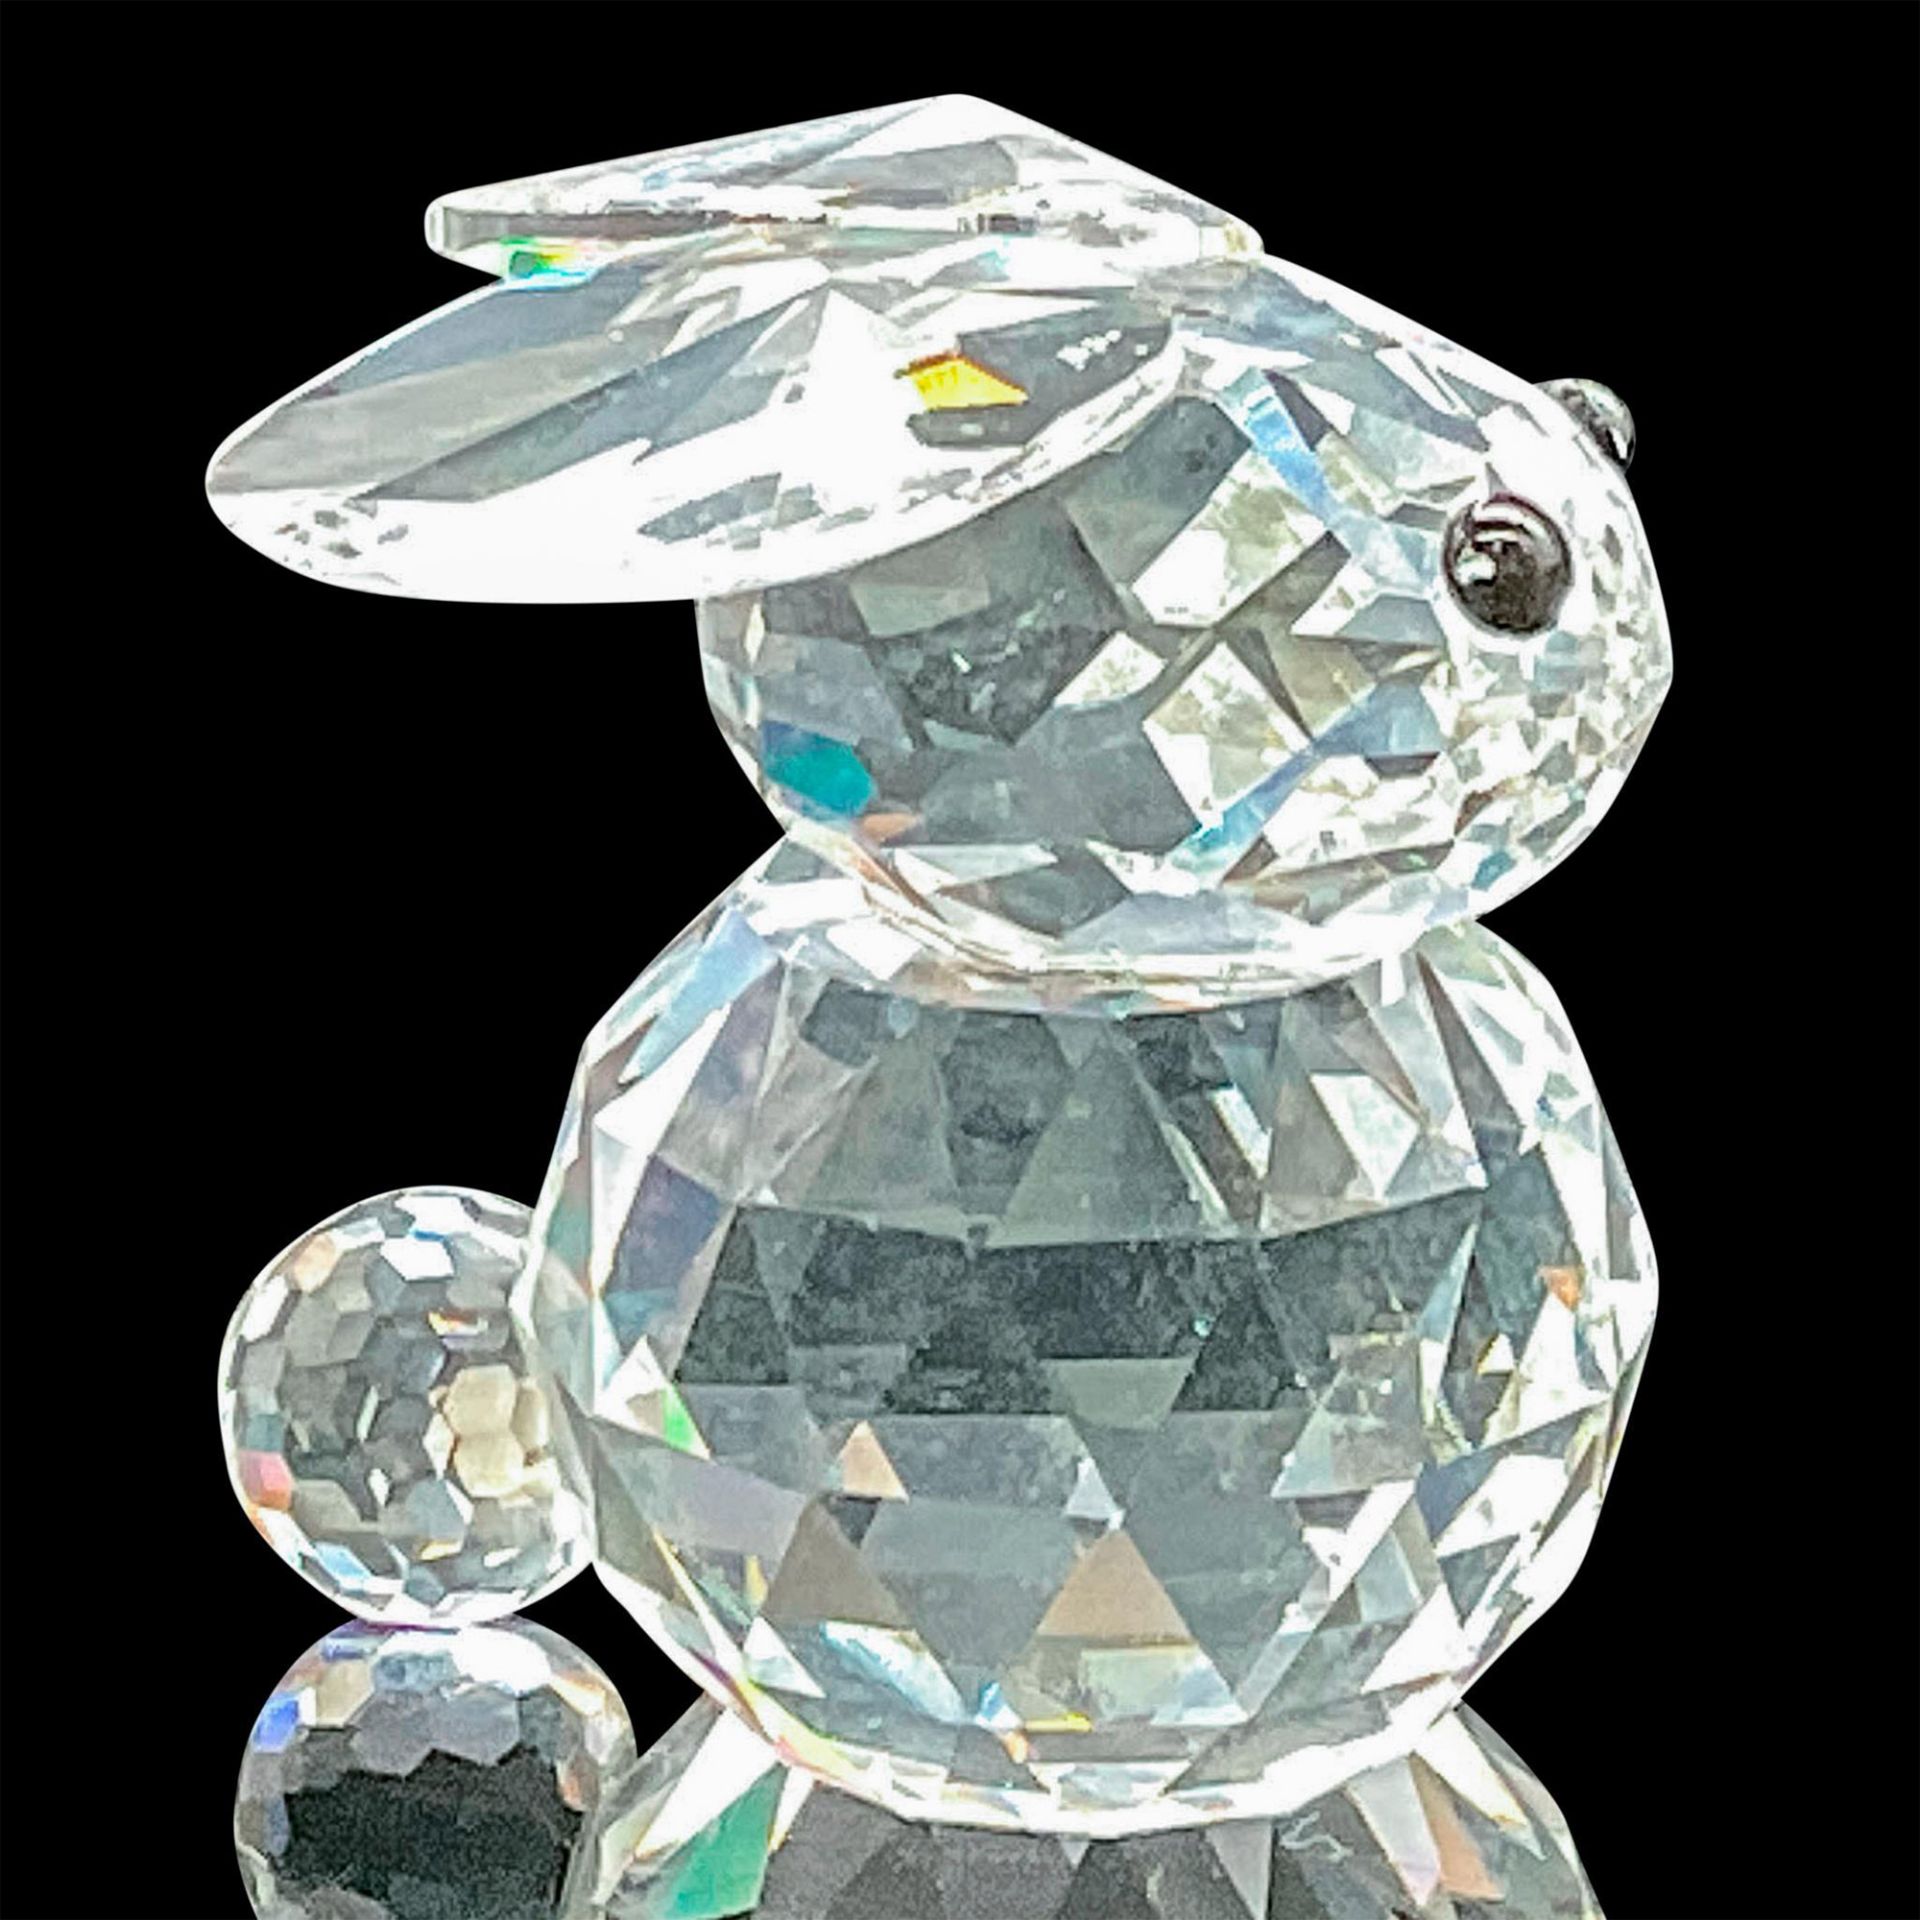 Swarovski Crystal Figurine Miniature Rabbit - Image 2 of 3